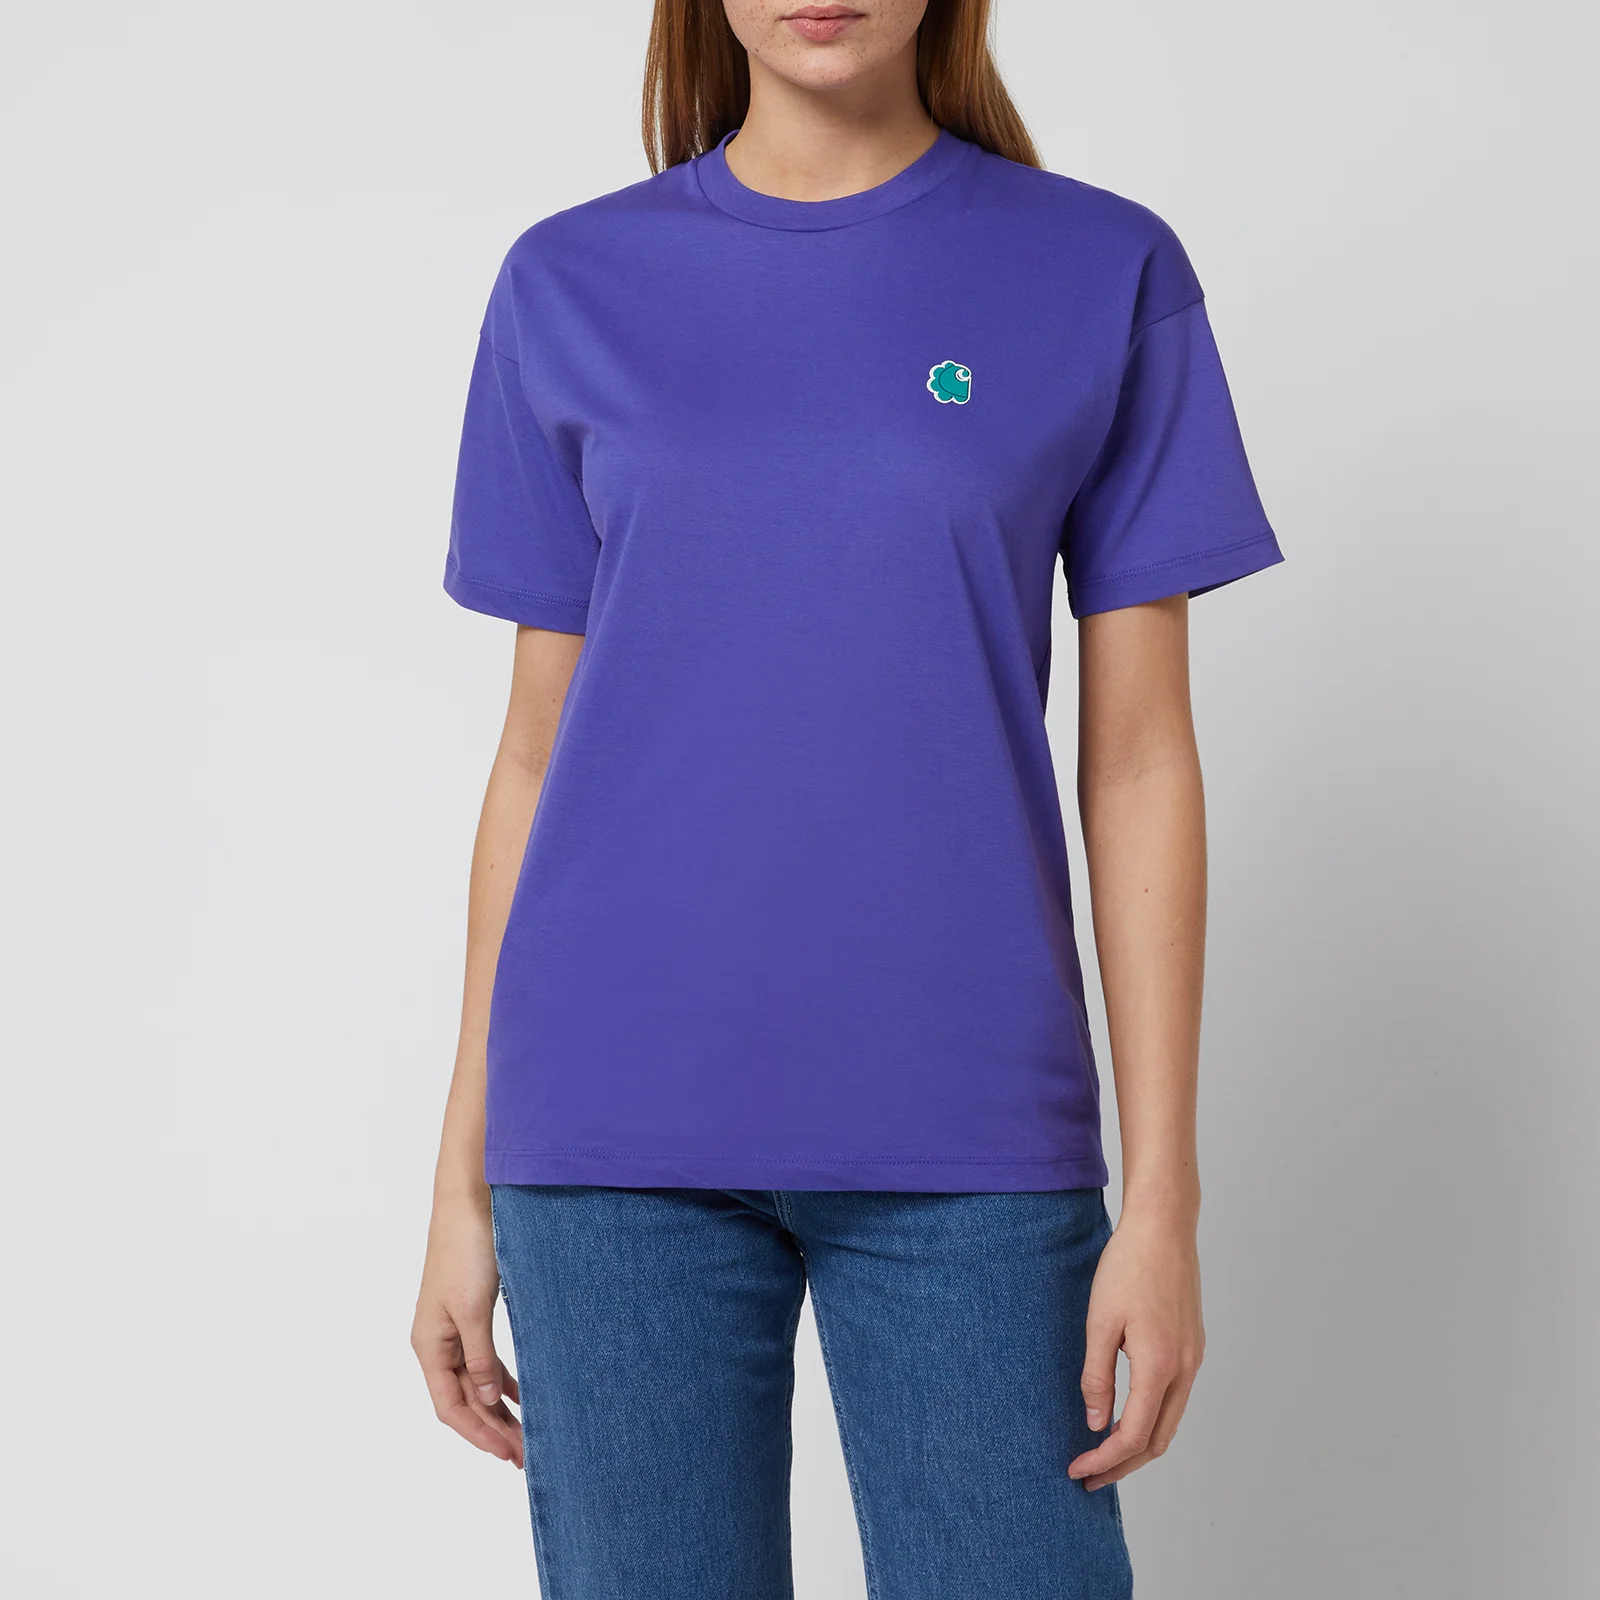 Carhartt WIP Women's Ideal T-Shirt - Razzmic Image 1